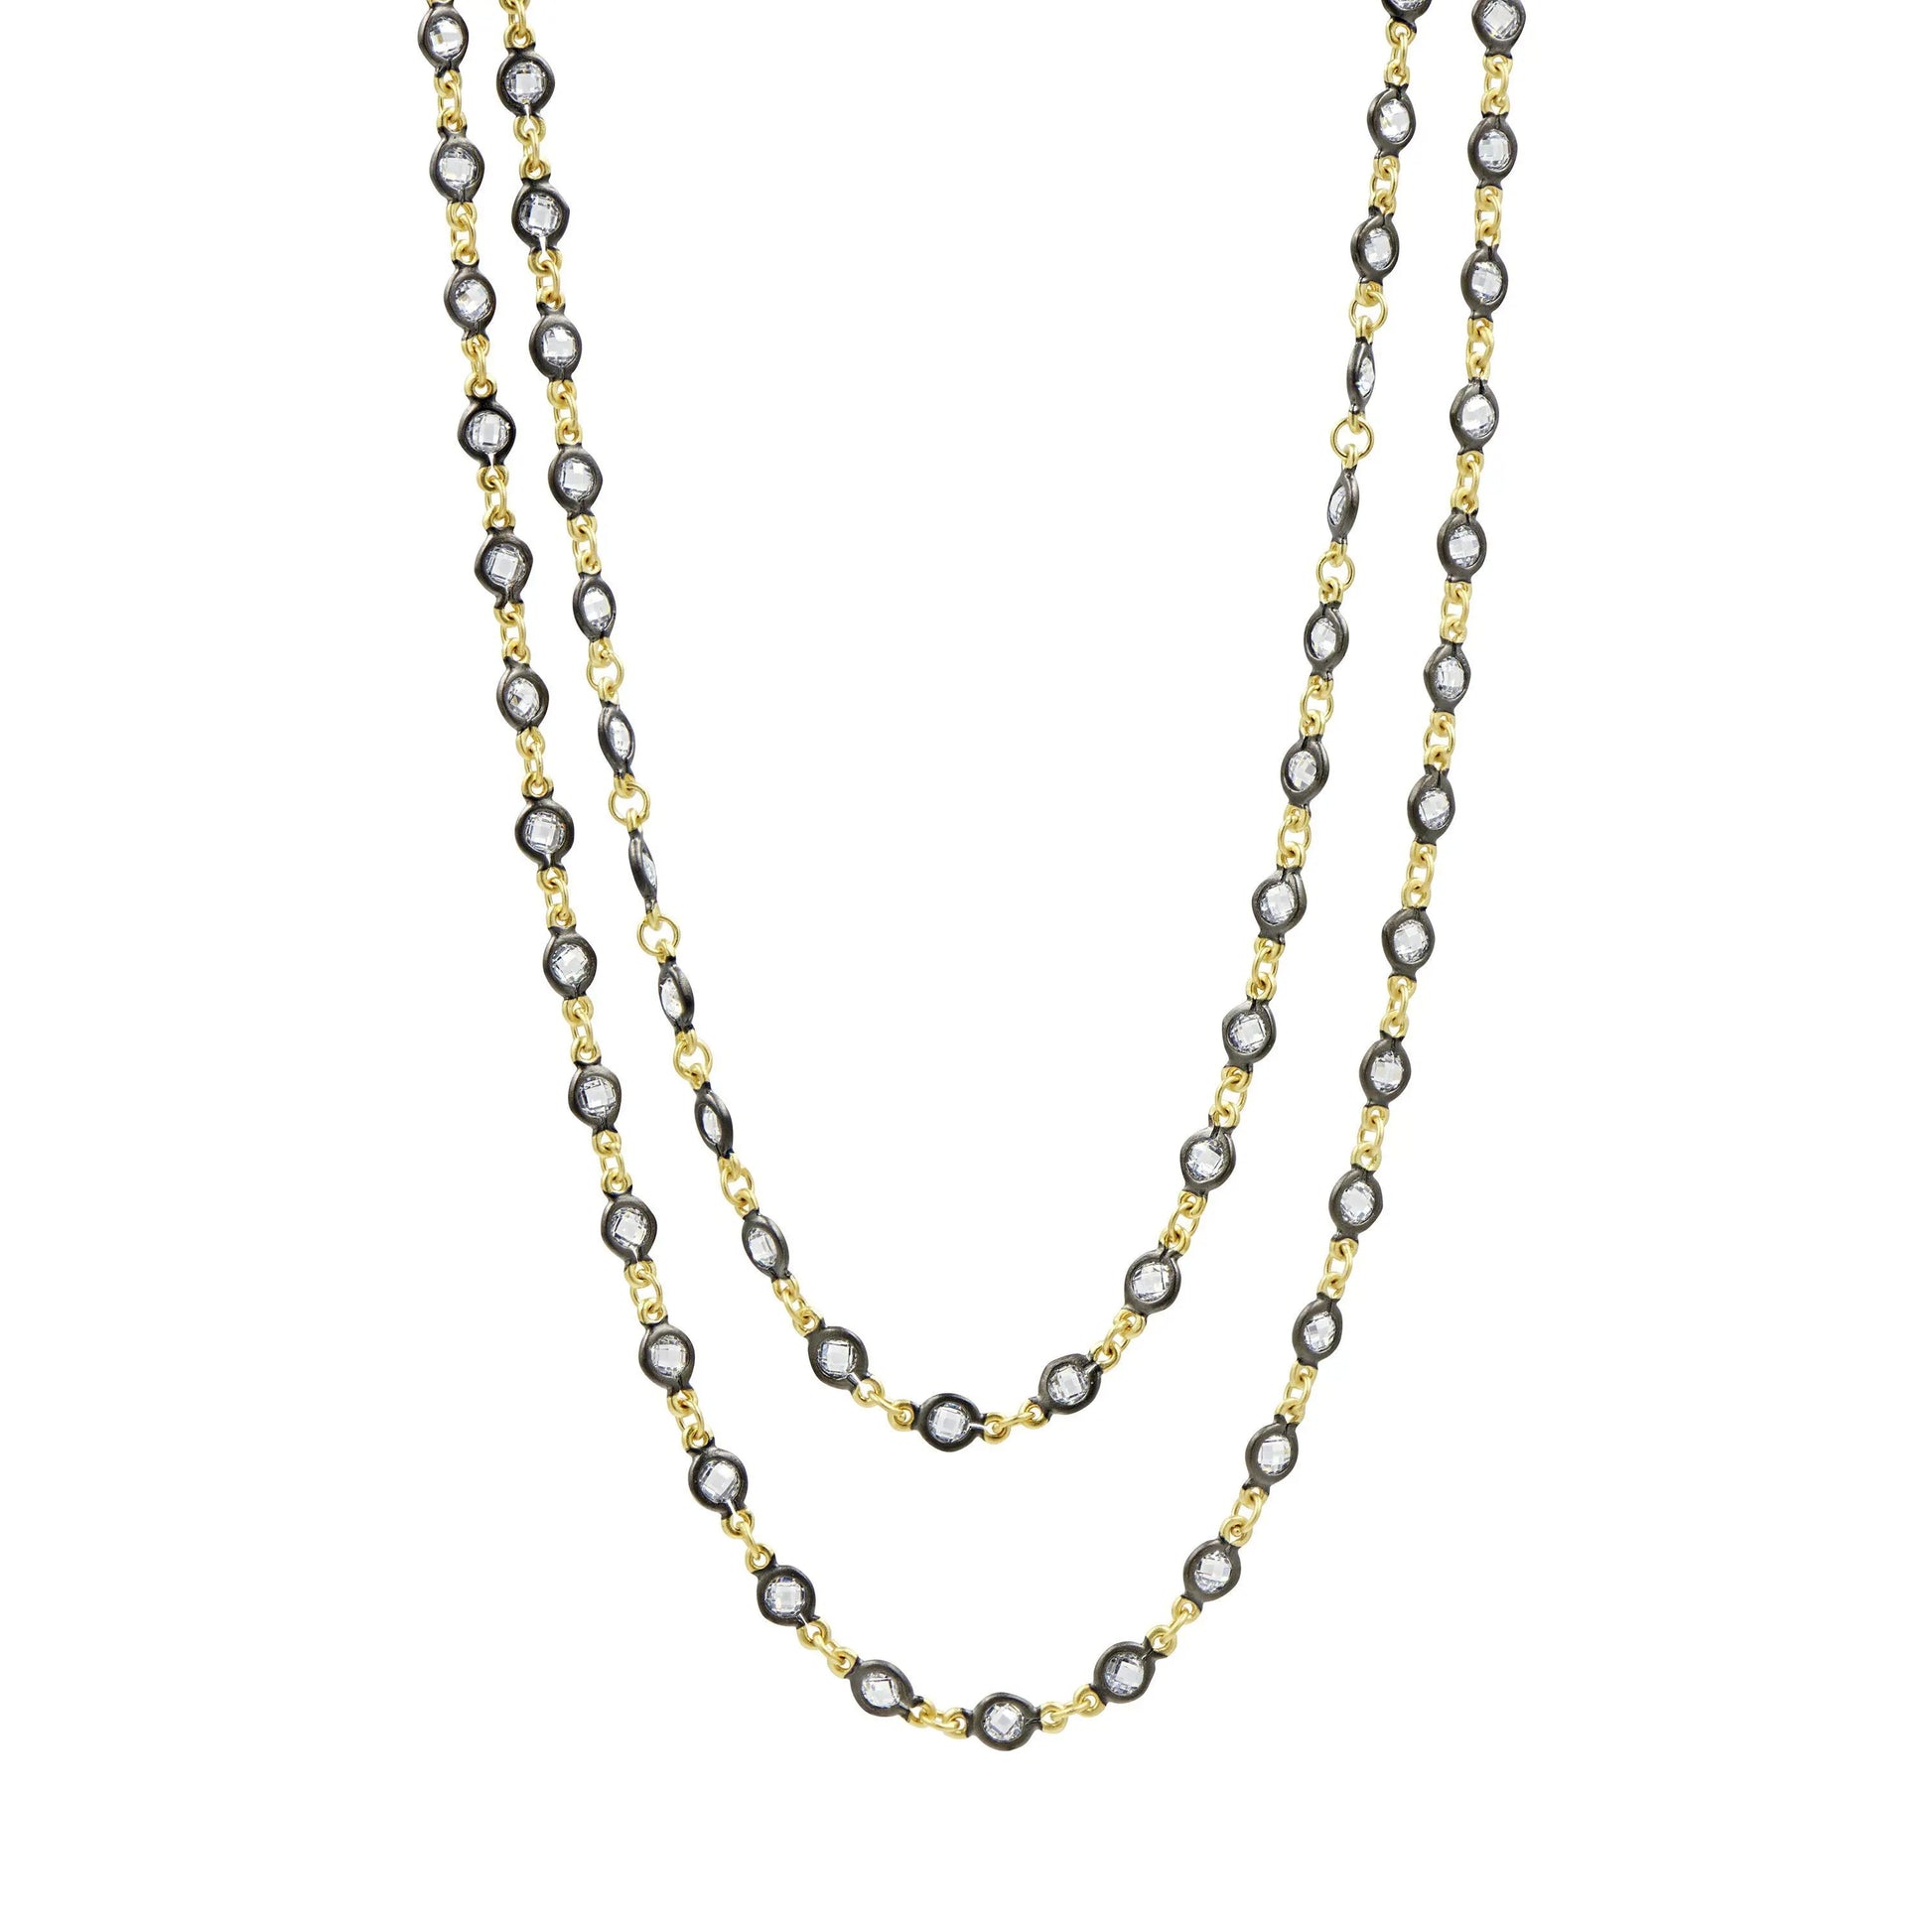 GoldBlack Faceted Stones Wrap Chain Necklace Signature NECKLACE